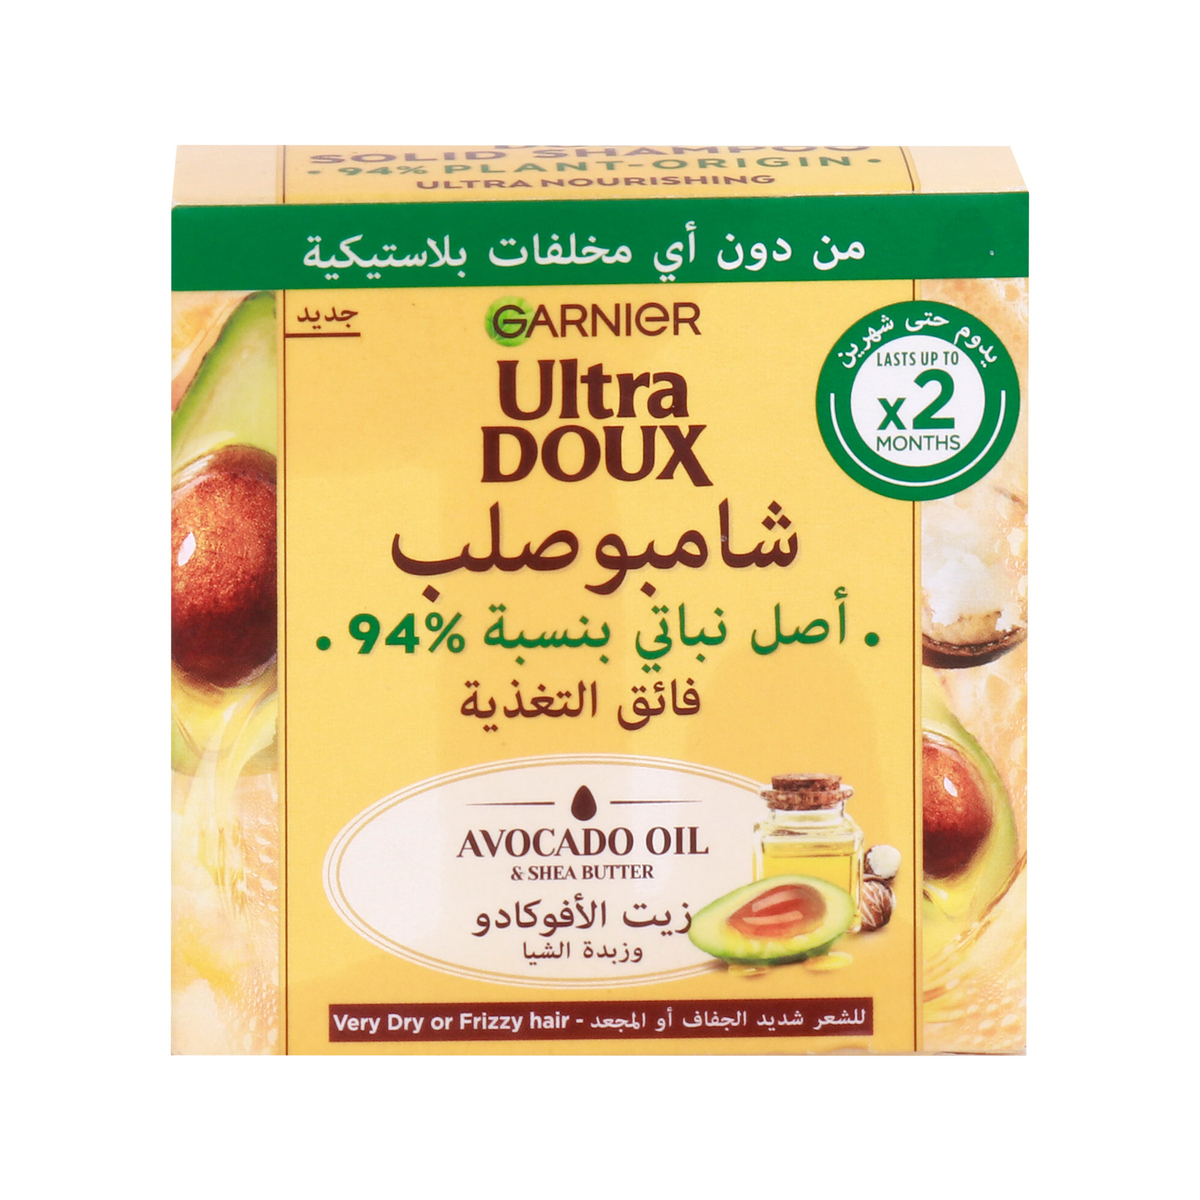 Garnier Ultra Doux Solid Shampoo with Avocado Oil, 60 g